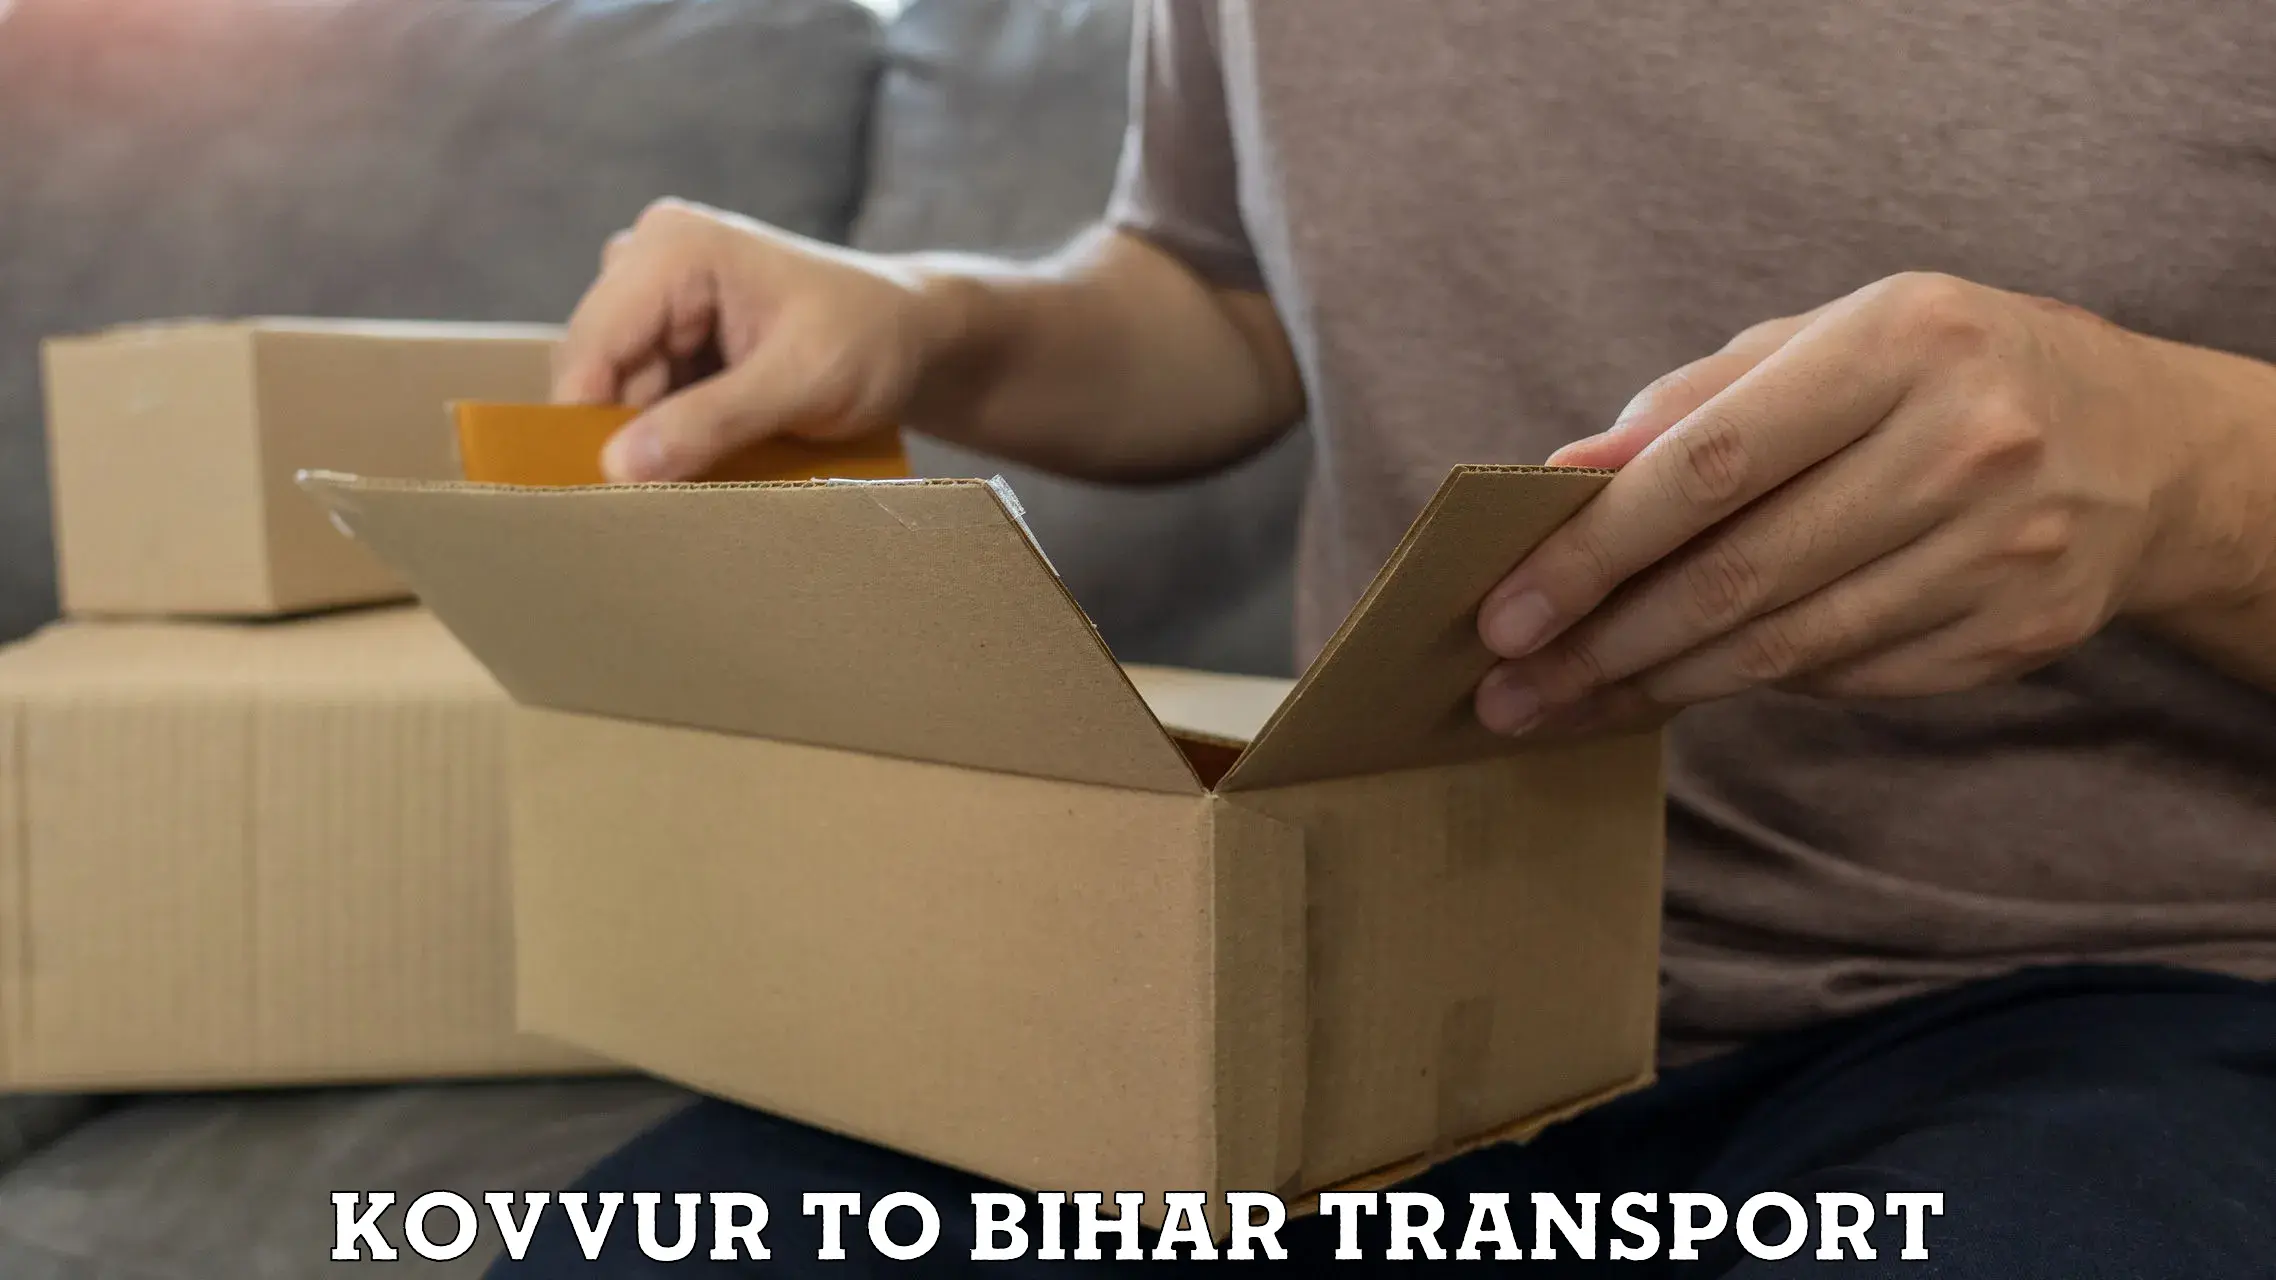 Daily transport service Kovvur to Bhorey